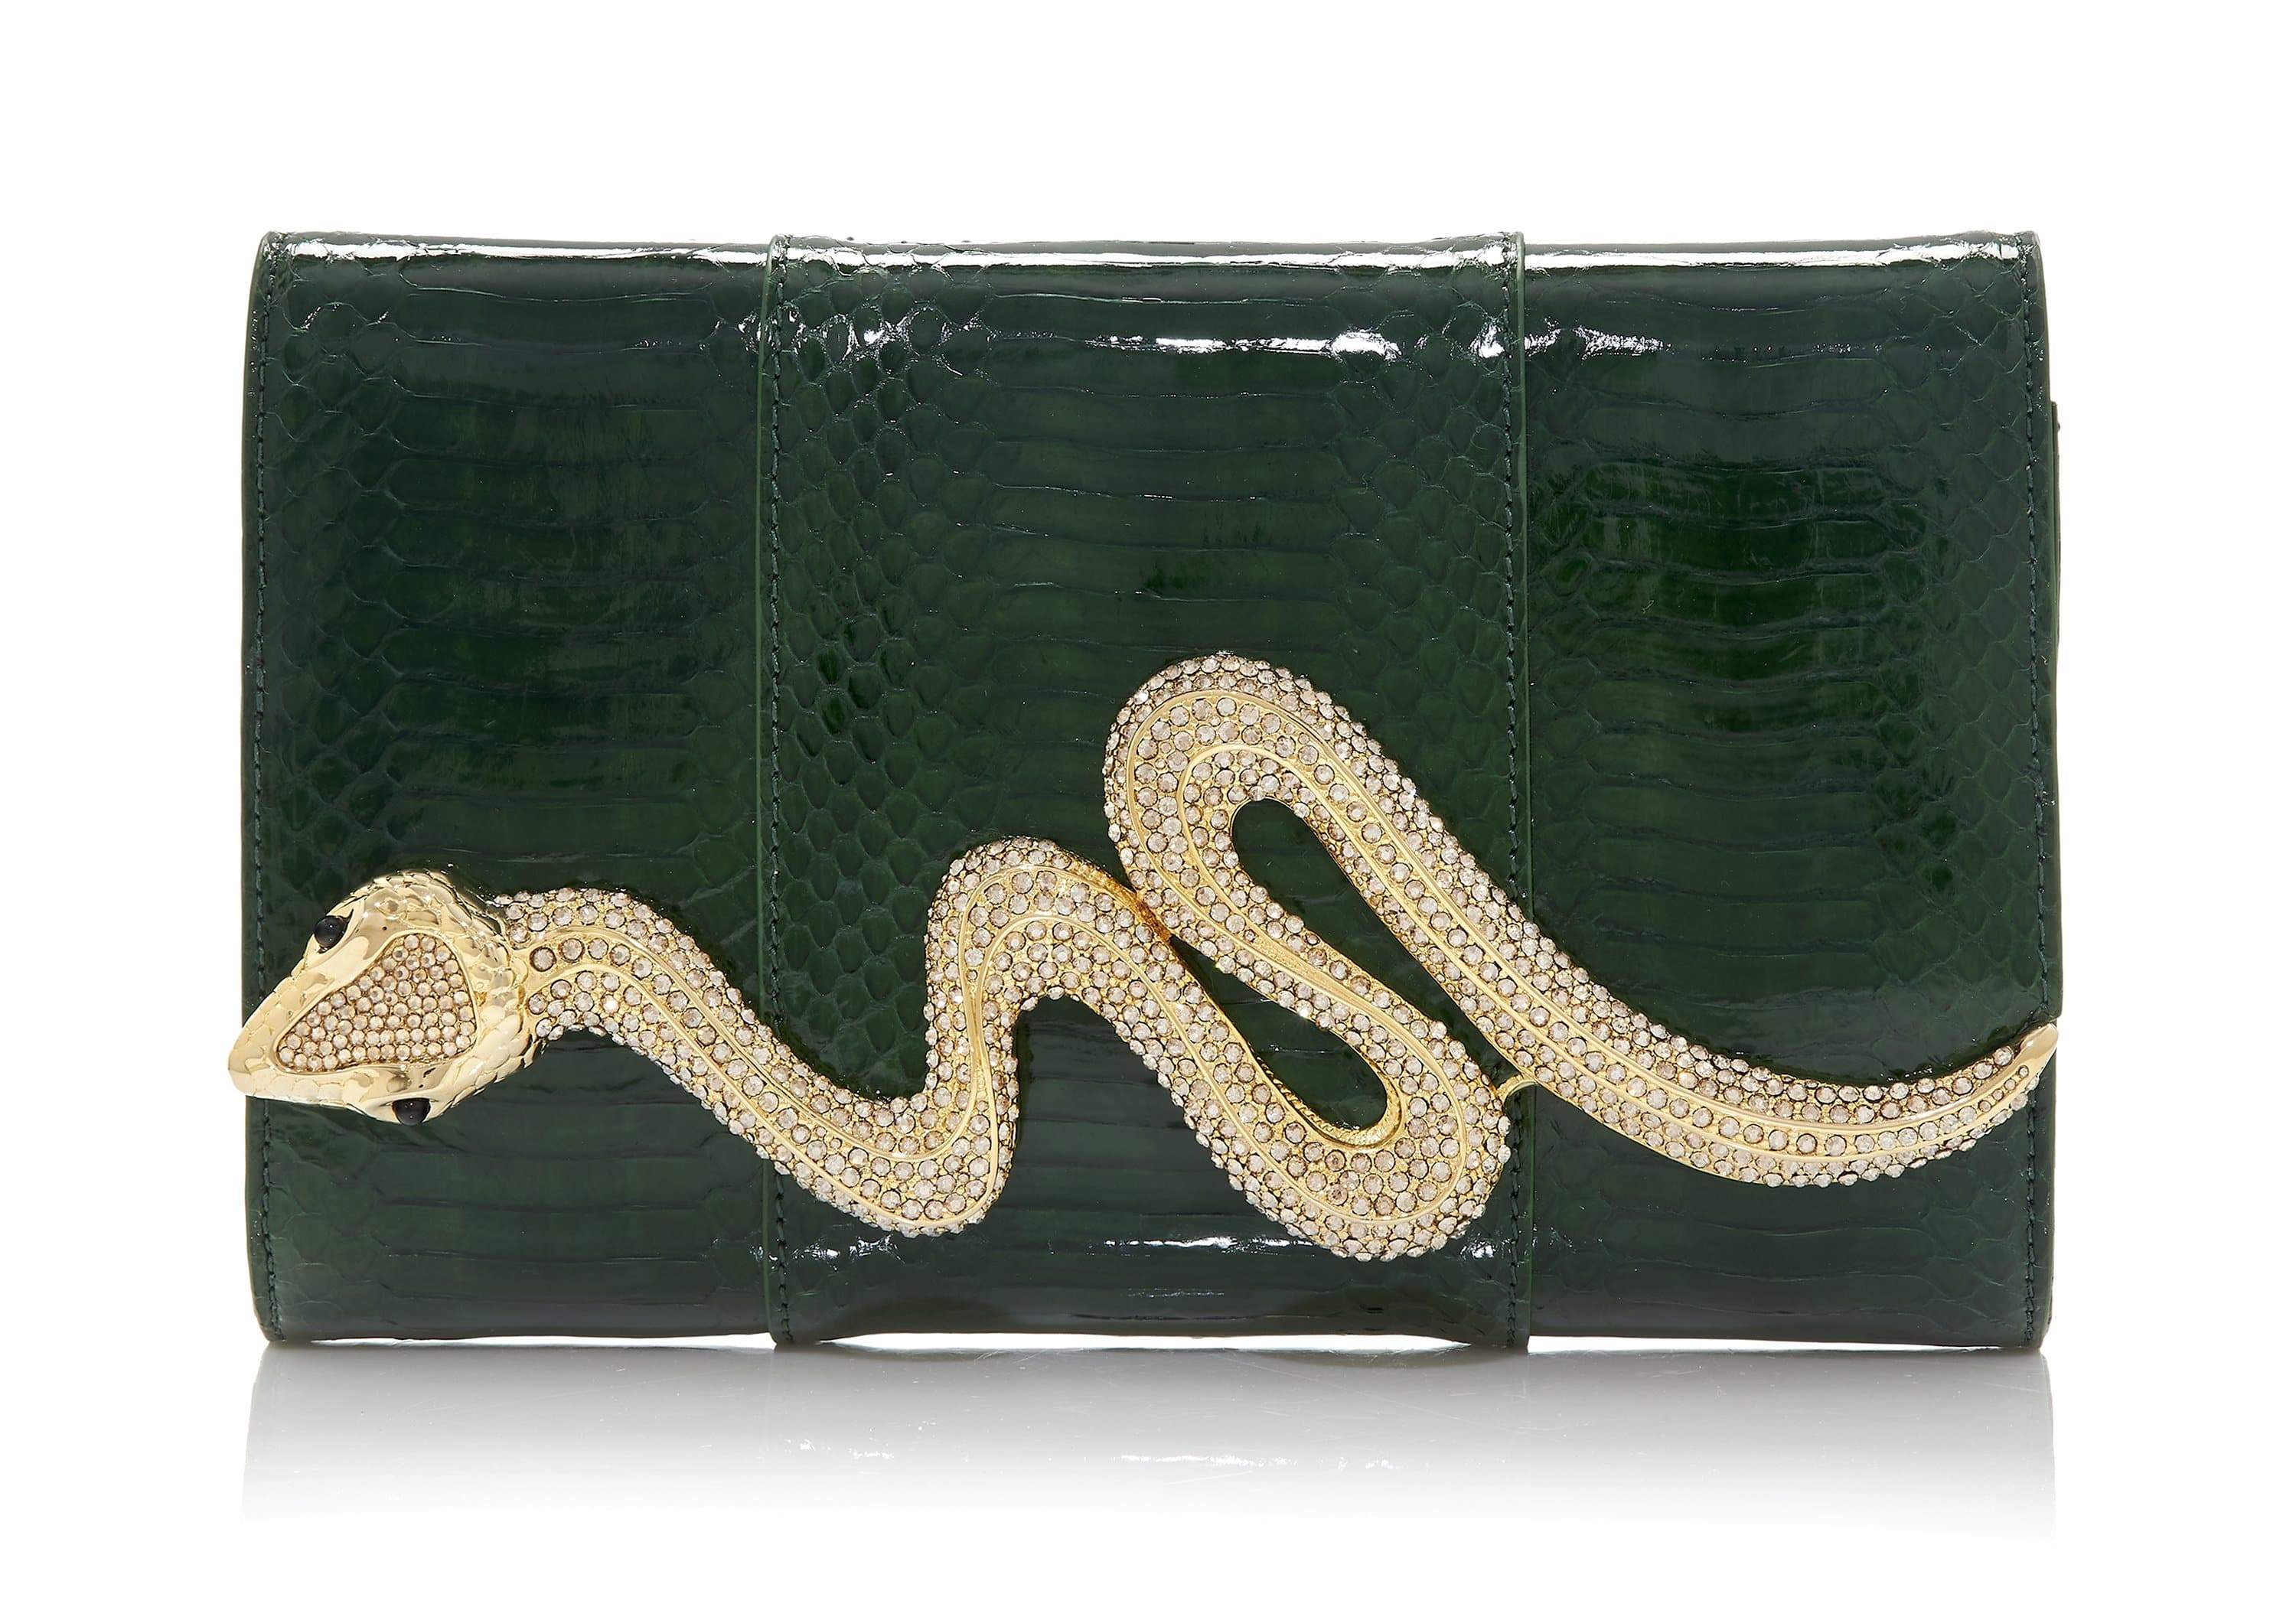 Judith Leiber pink and green snakeskin frame handbag | Judith leiber  handbags, Judith leiber bags, Handbag